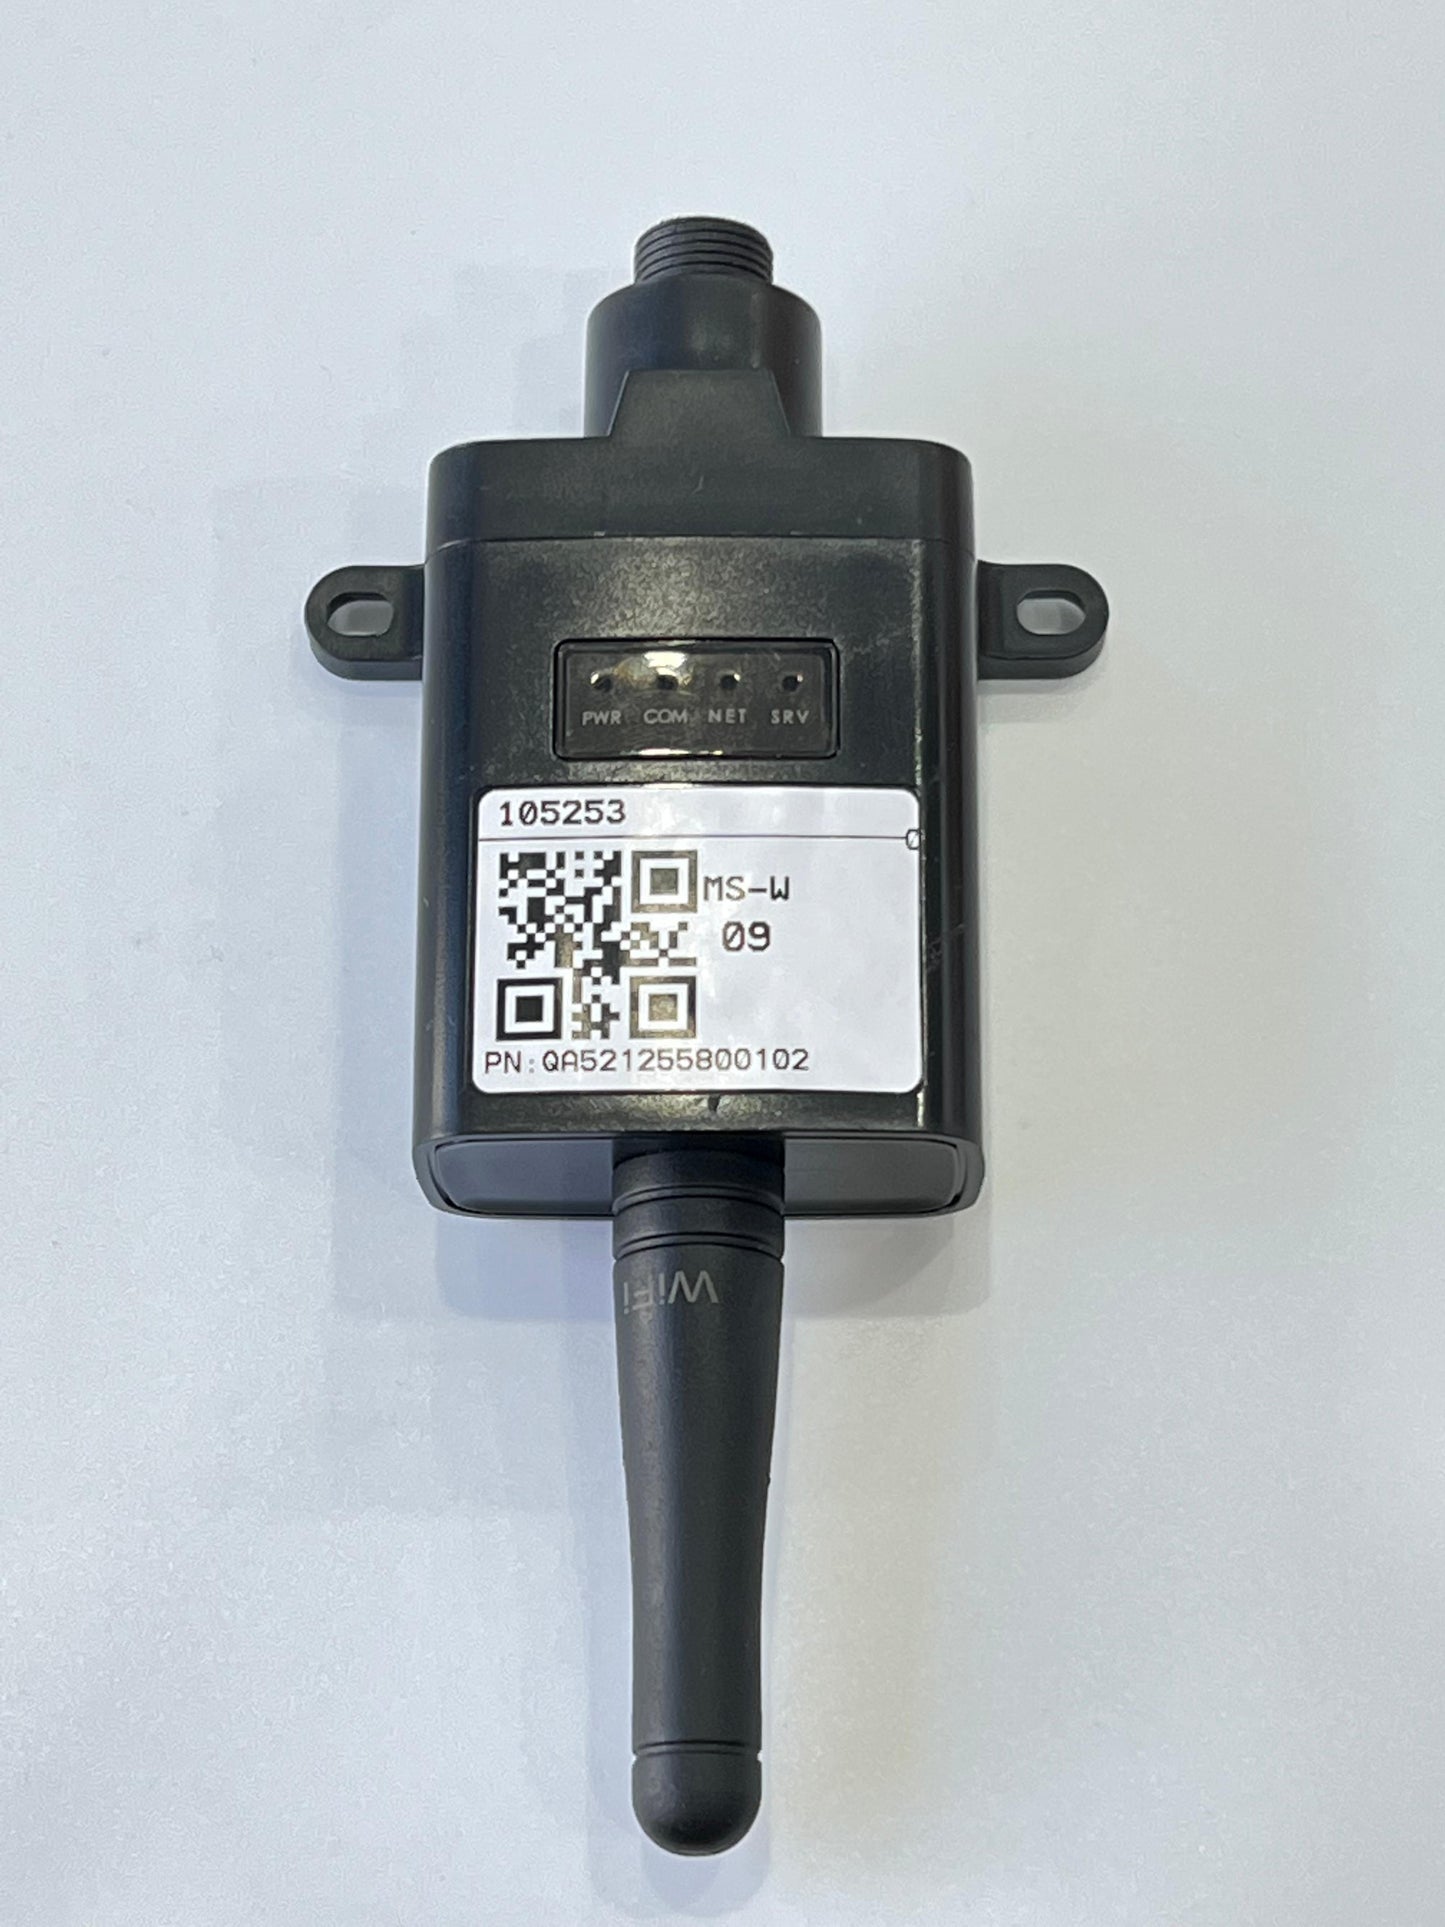 SRNE 1/2pc Wireless WIFI Module Remote Monitoring Communication Cable RS-485 Port For SRNE Off-Grid Solar Hybrid Inverter